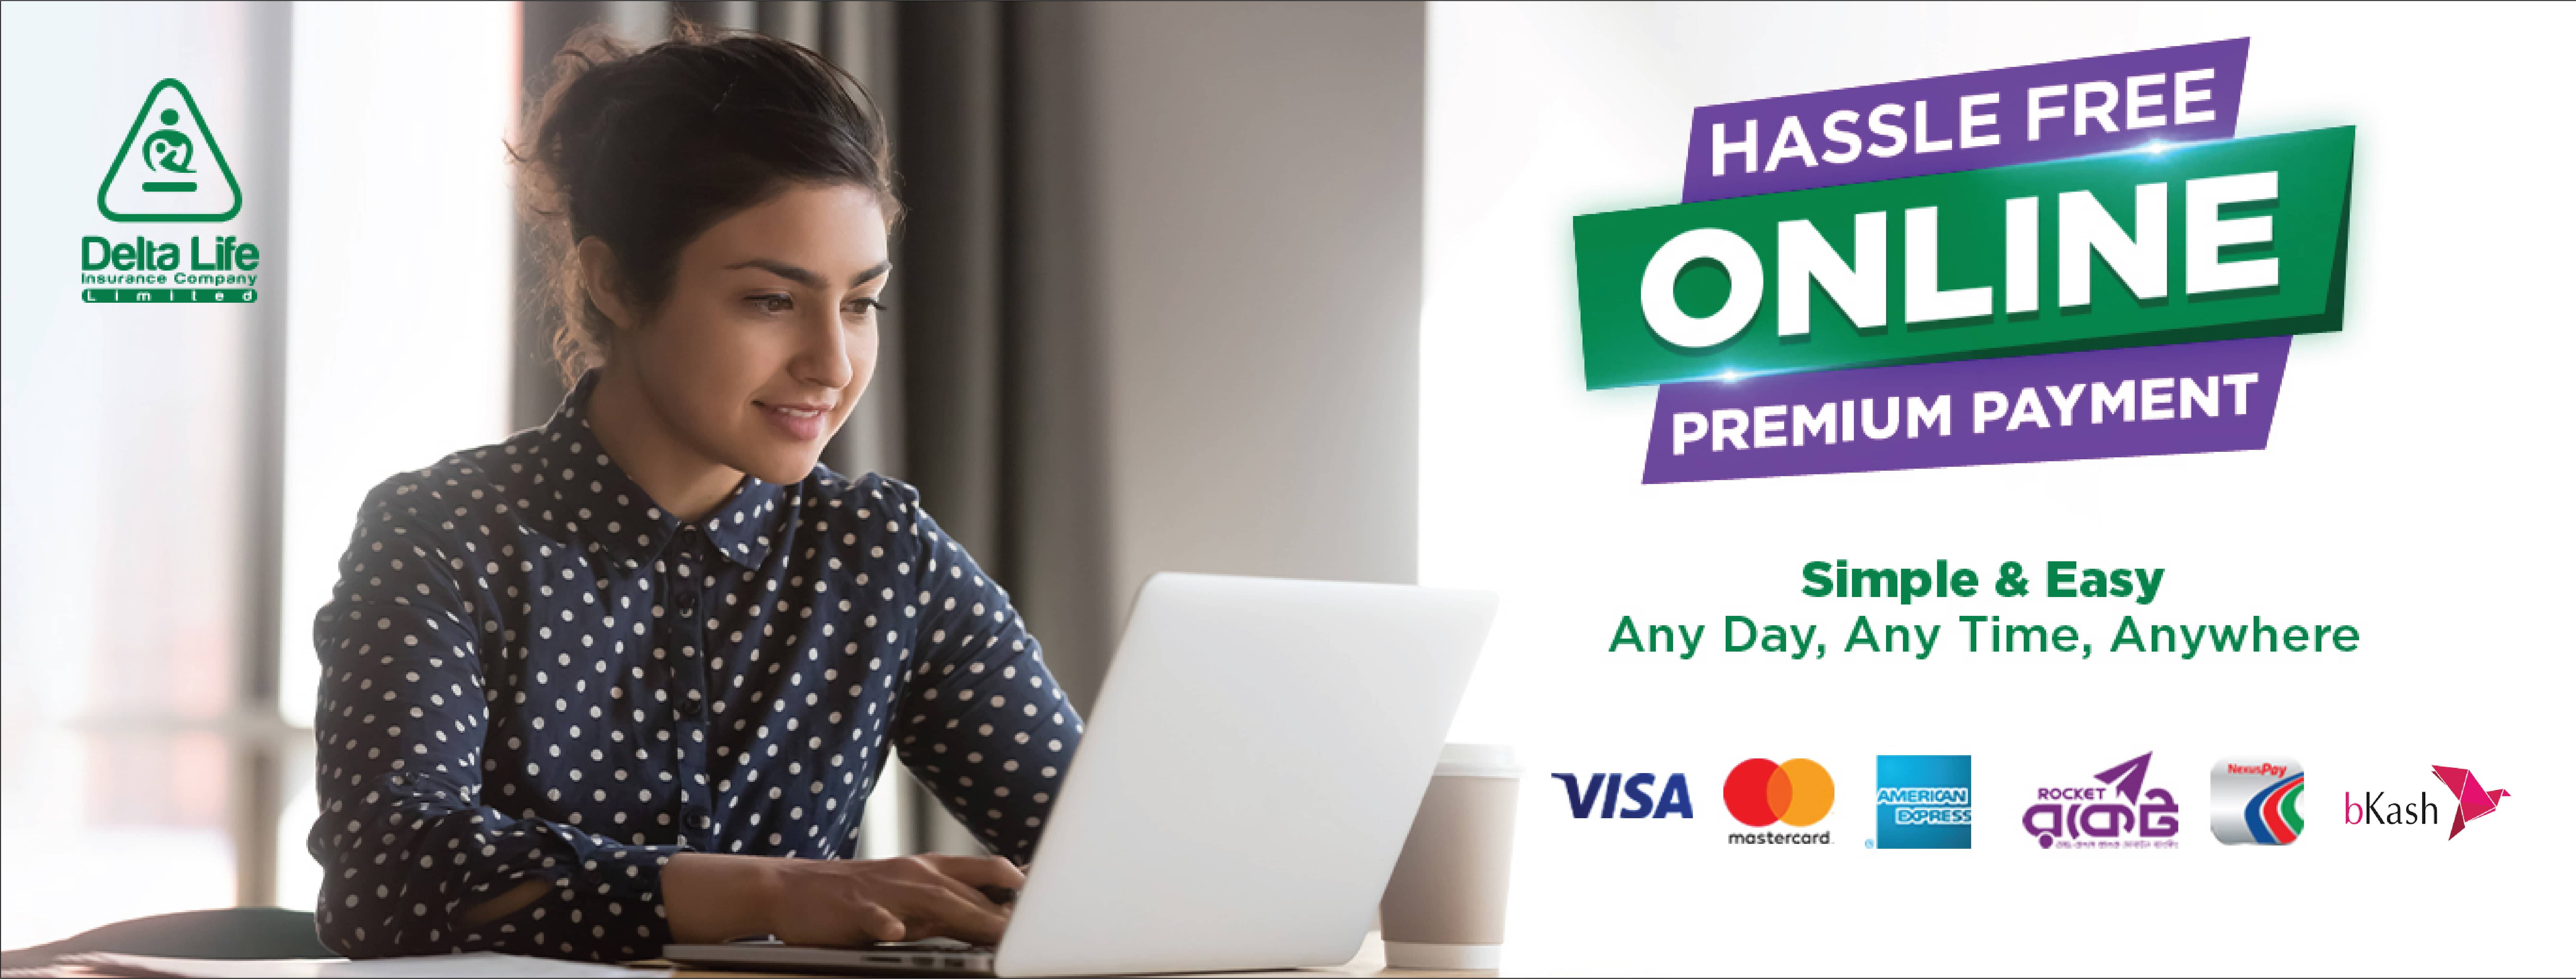 Online Premium Payment